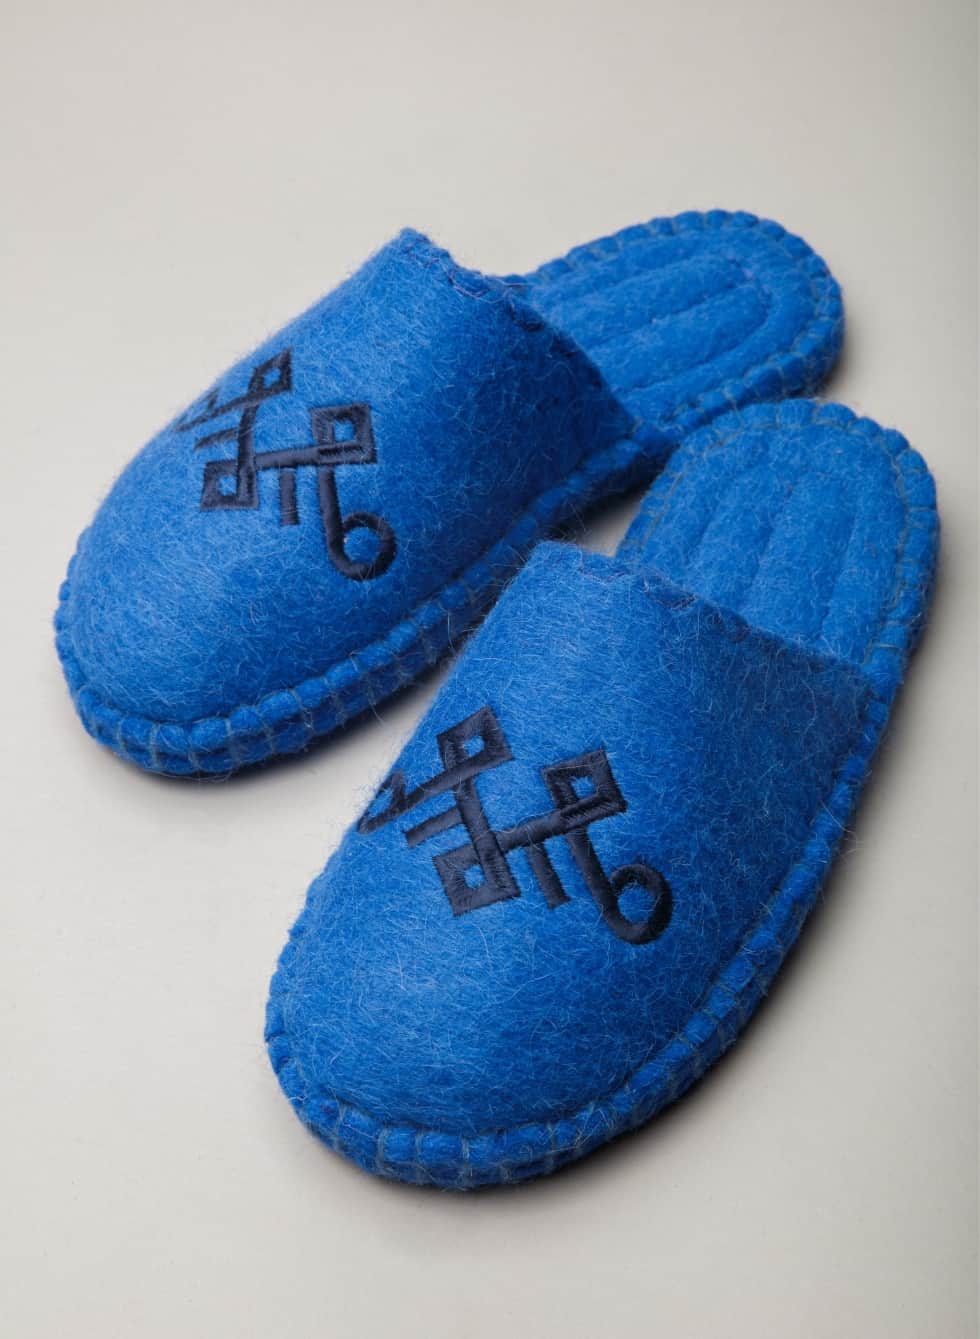 blue slippers